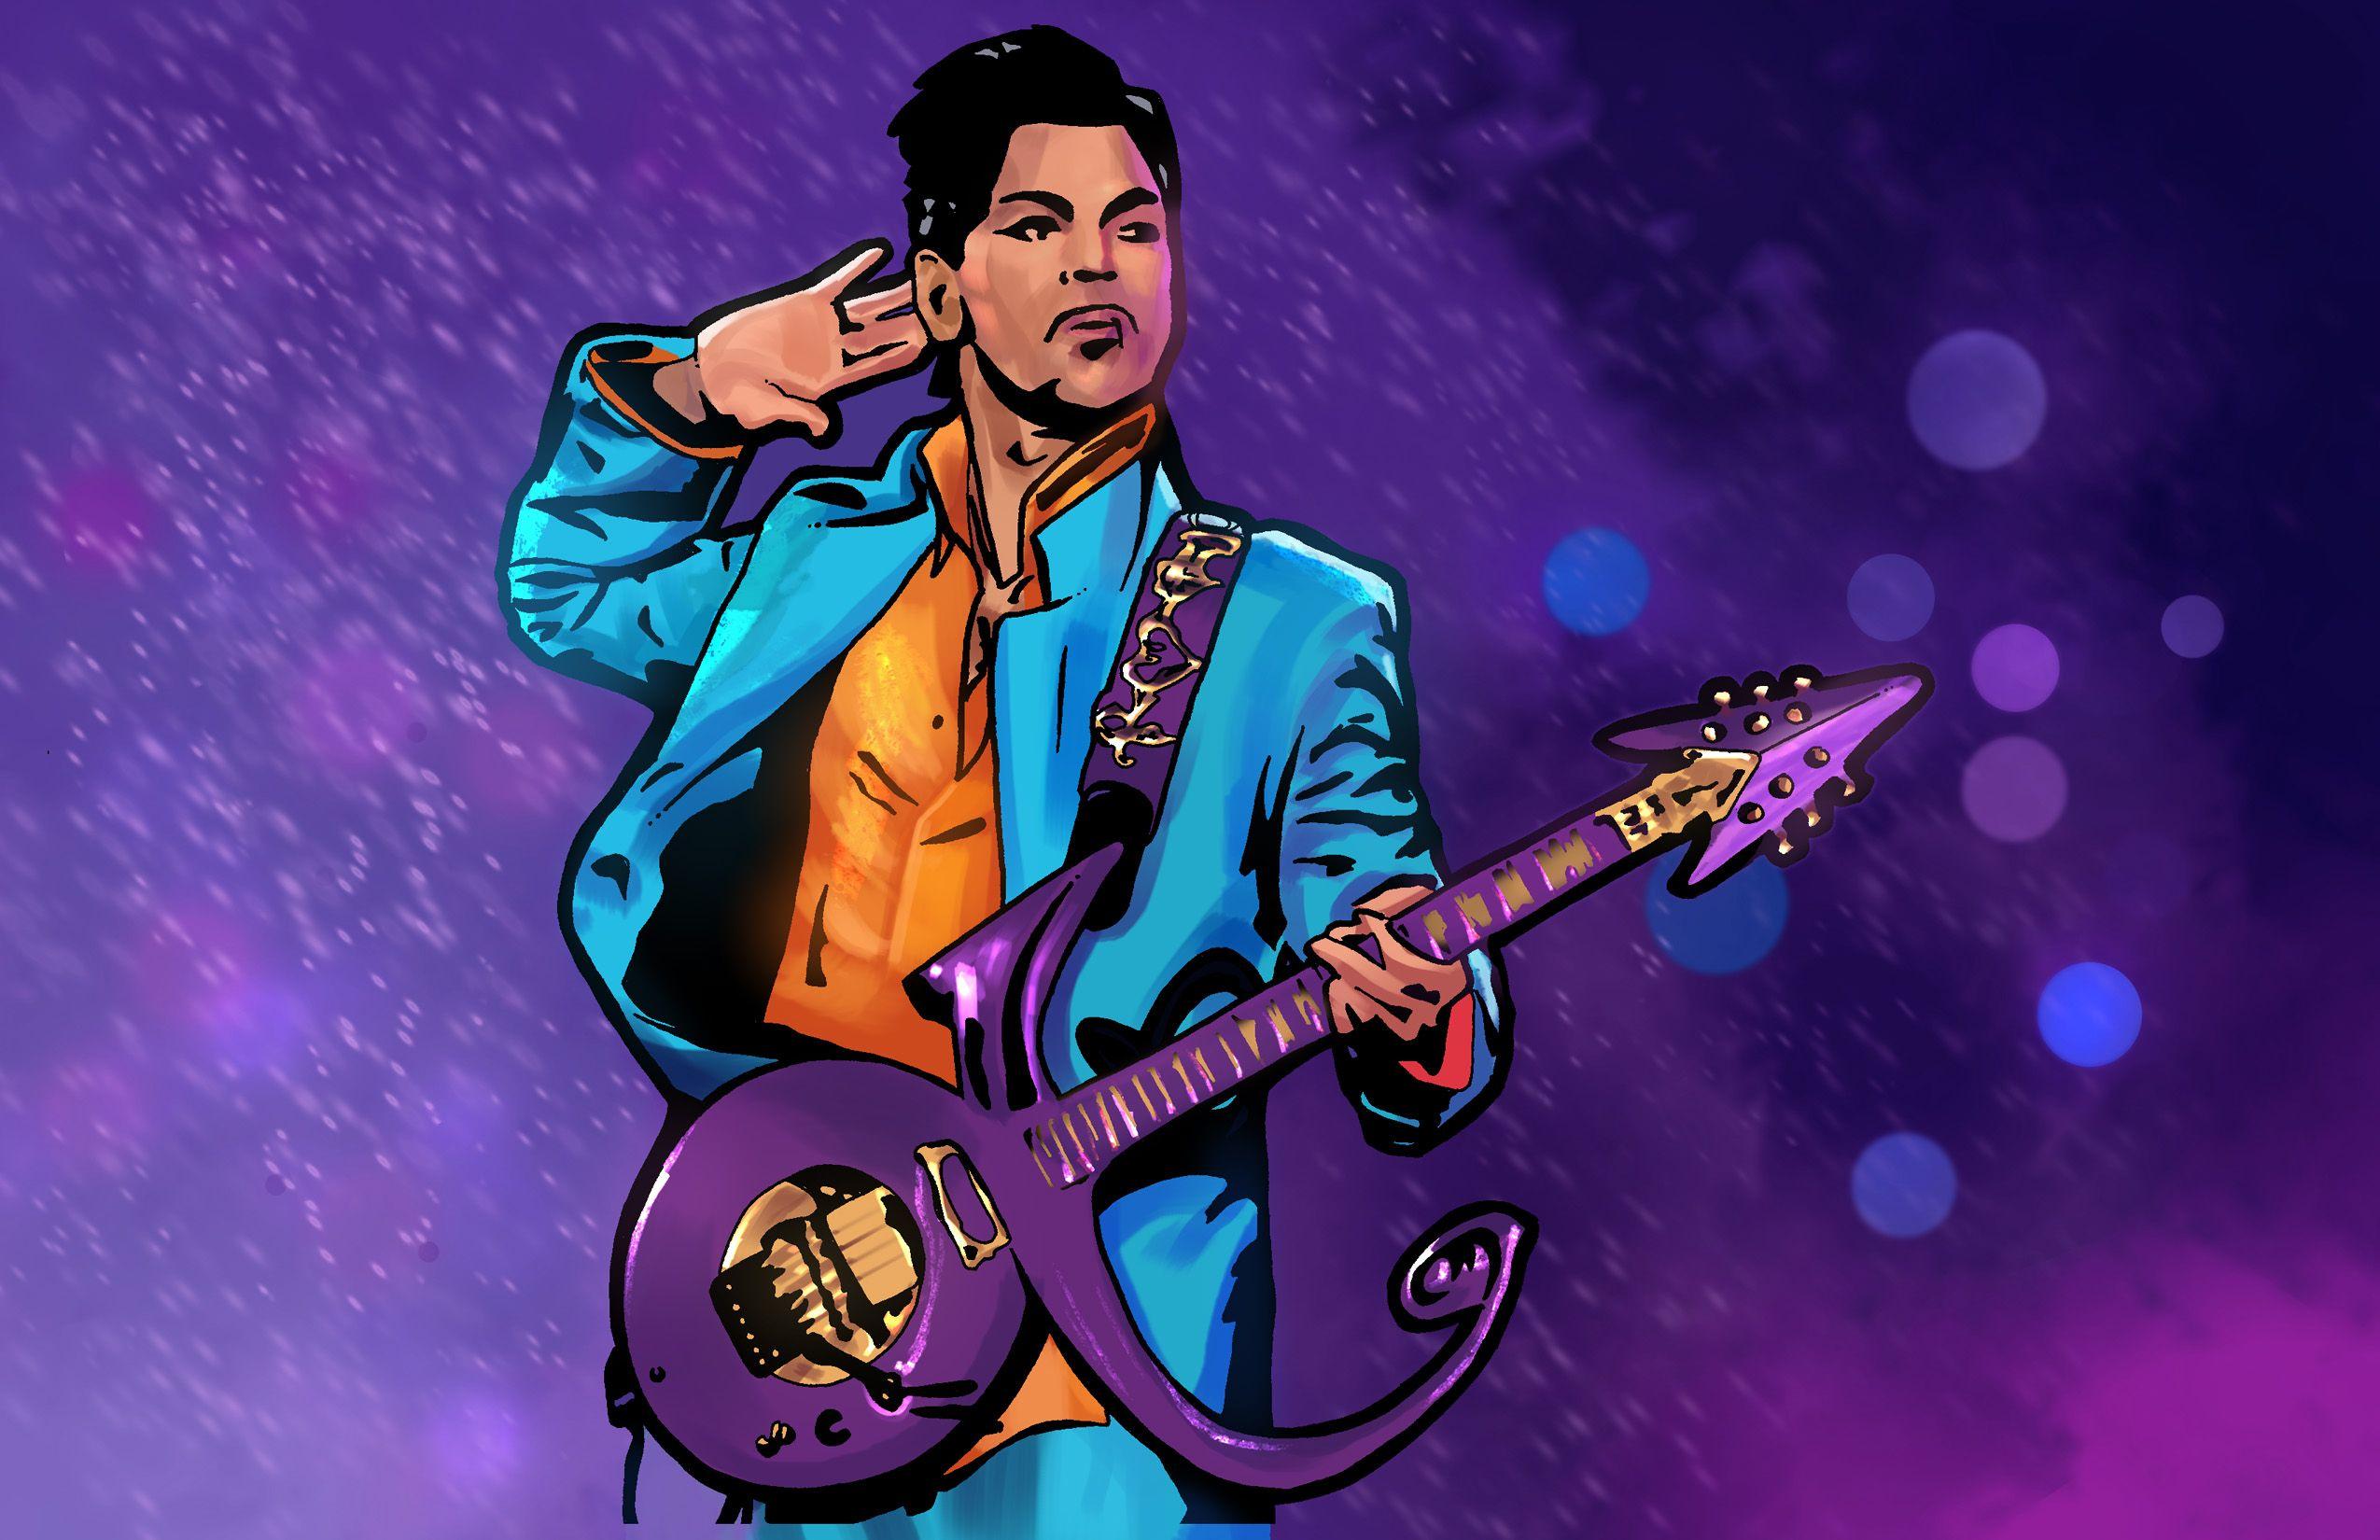 Prince singer wallpapers